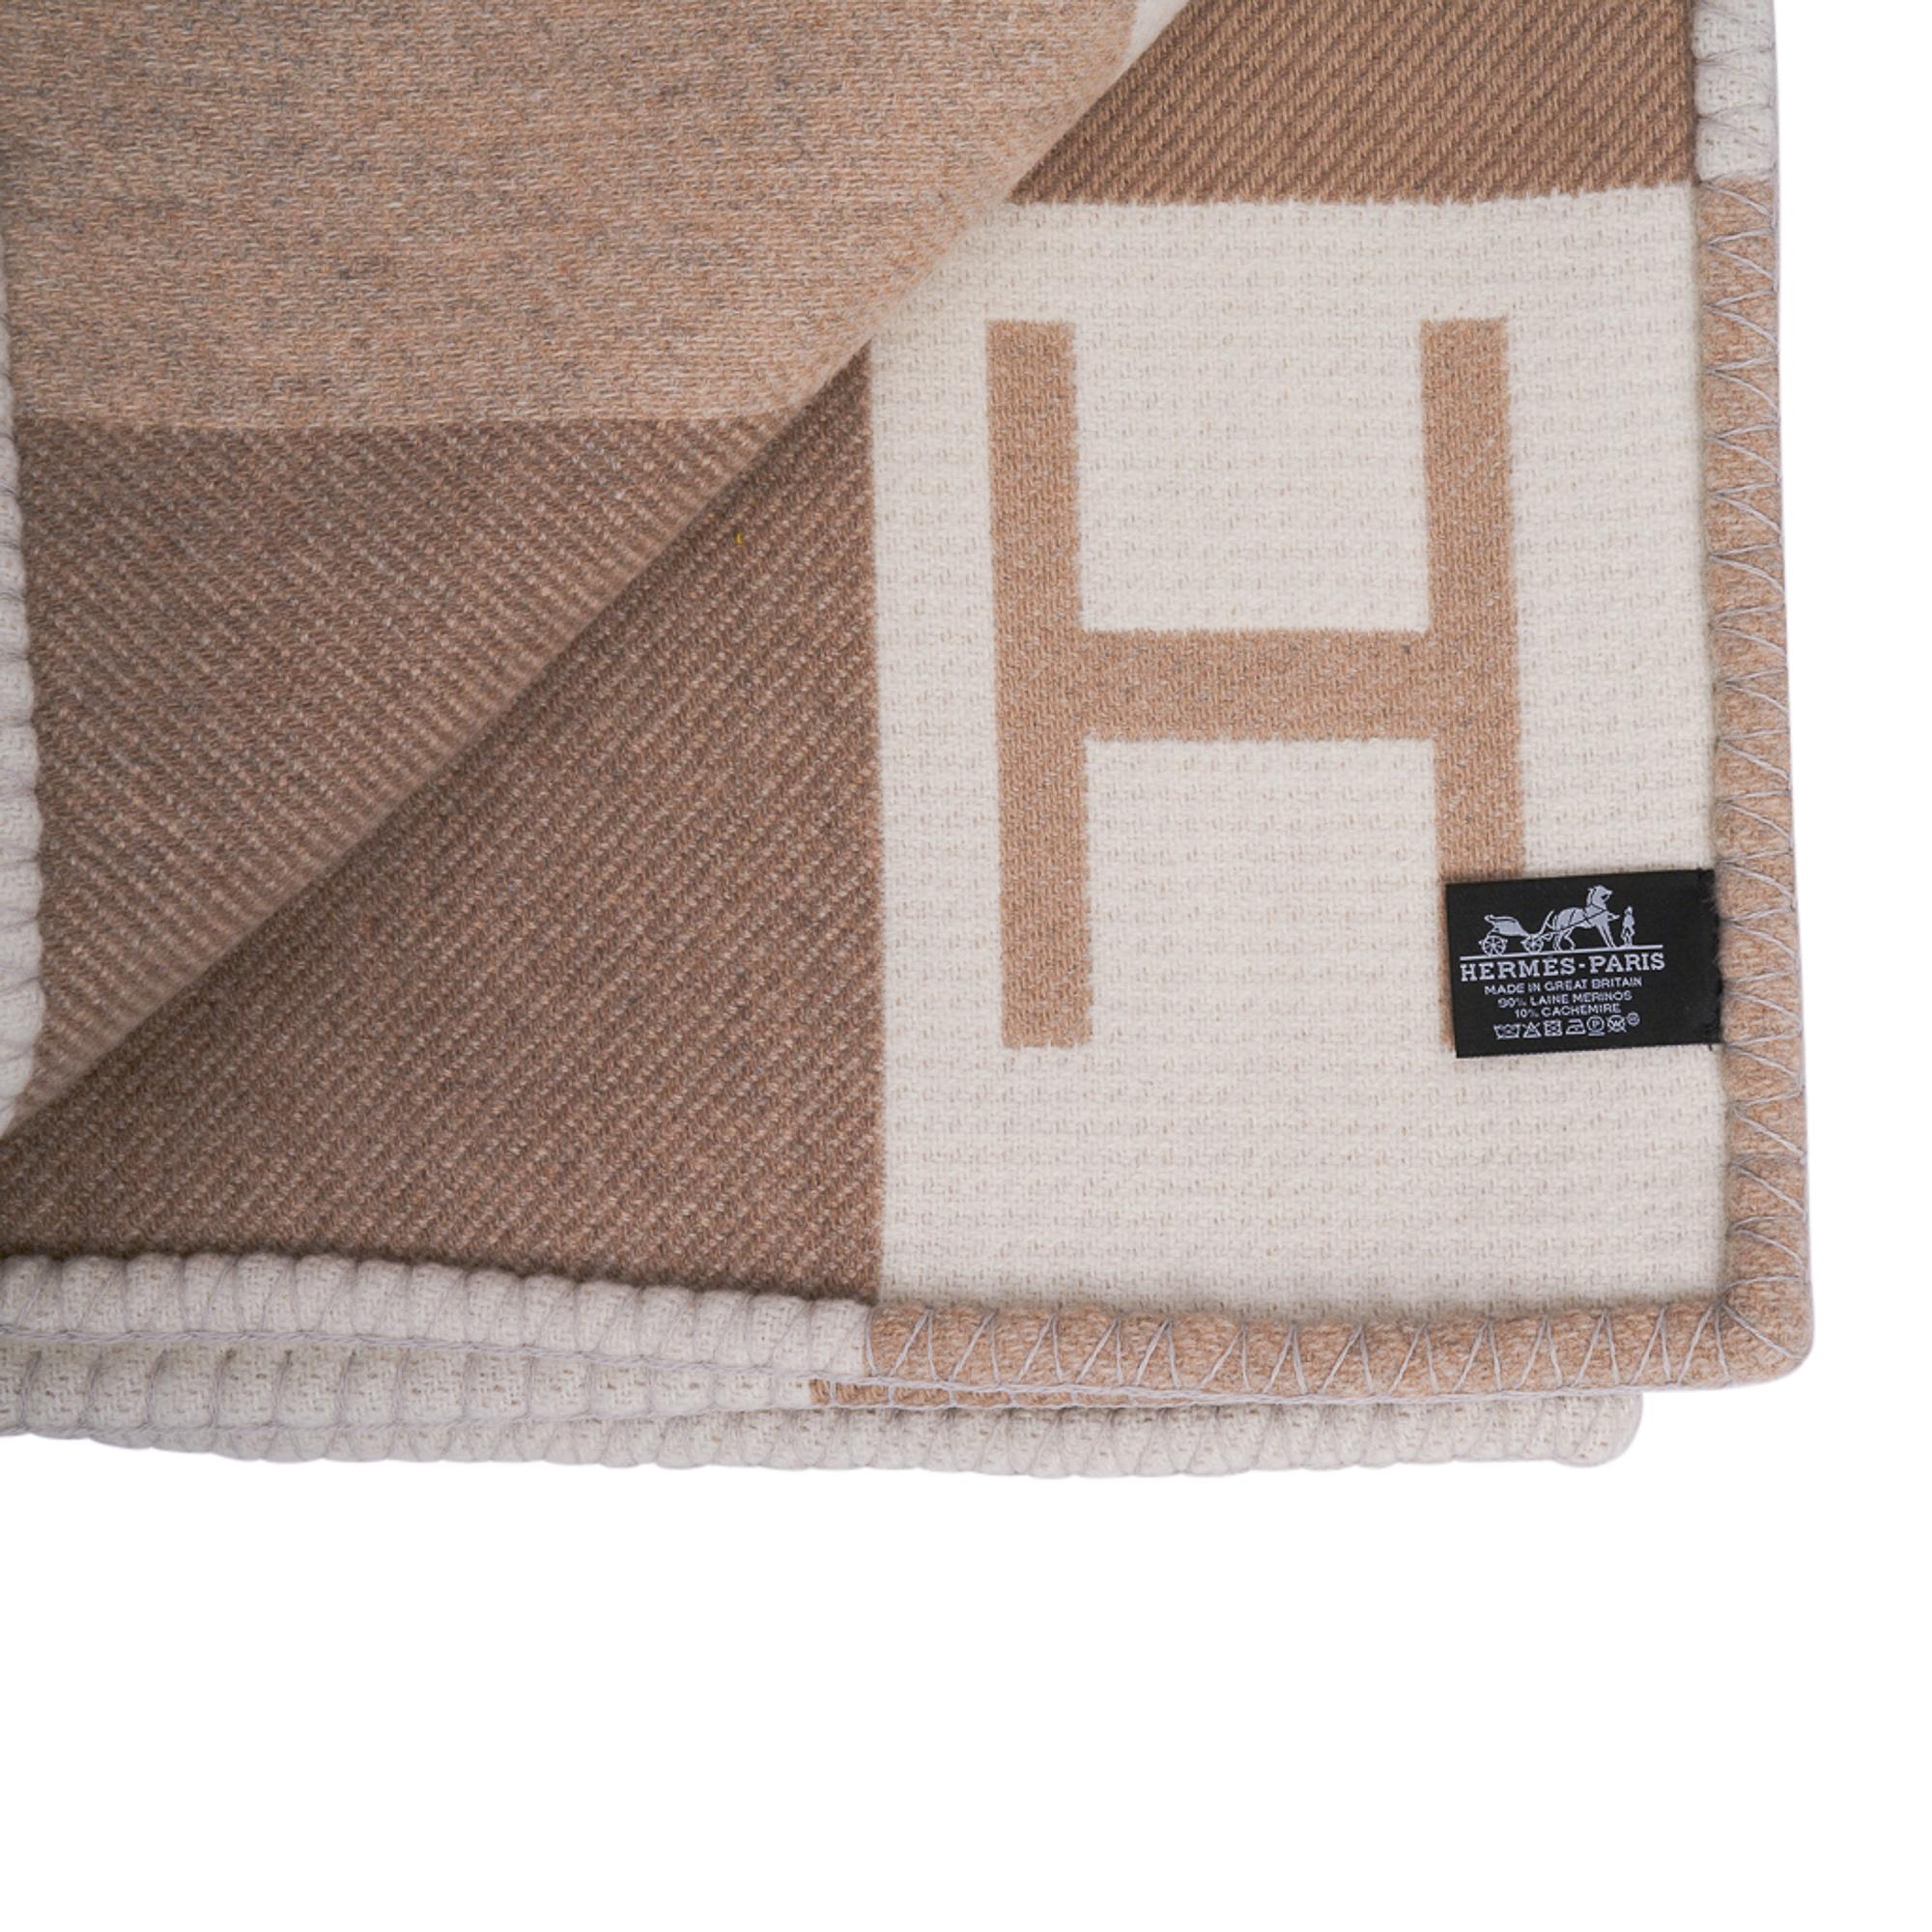 Hermes Avalon Vibration Throw Blanket Ecru Naturel Wool / Cashmere New 1